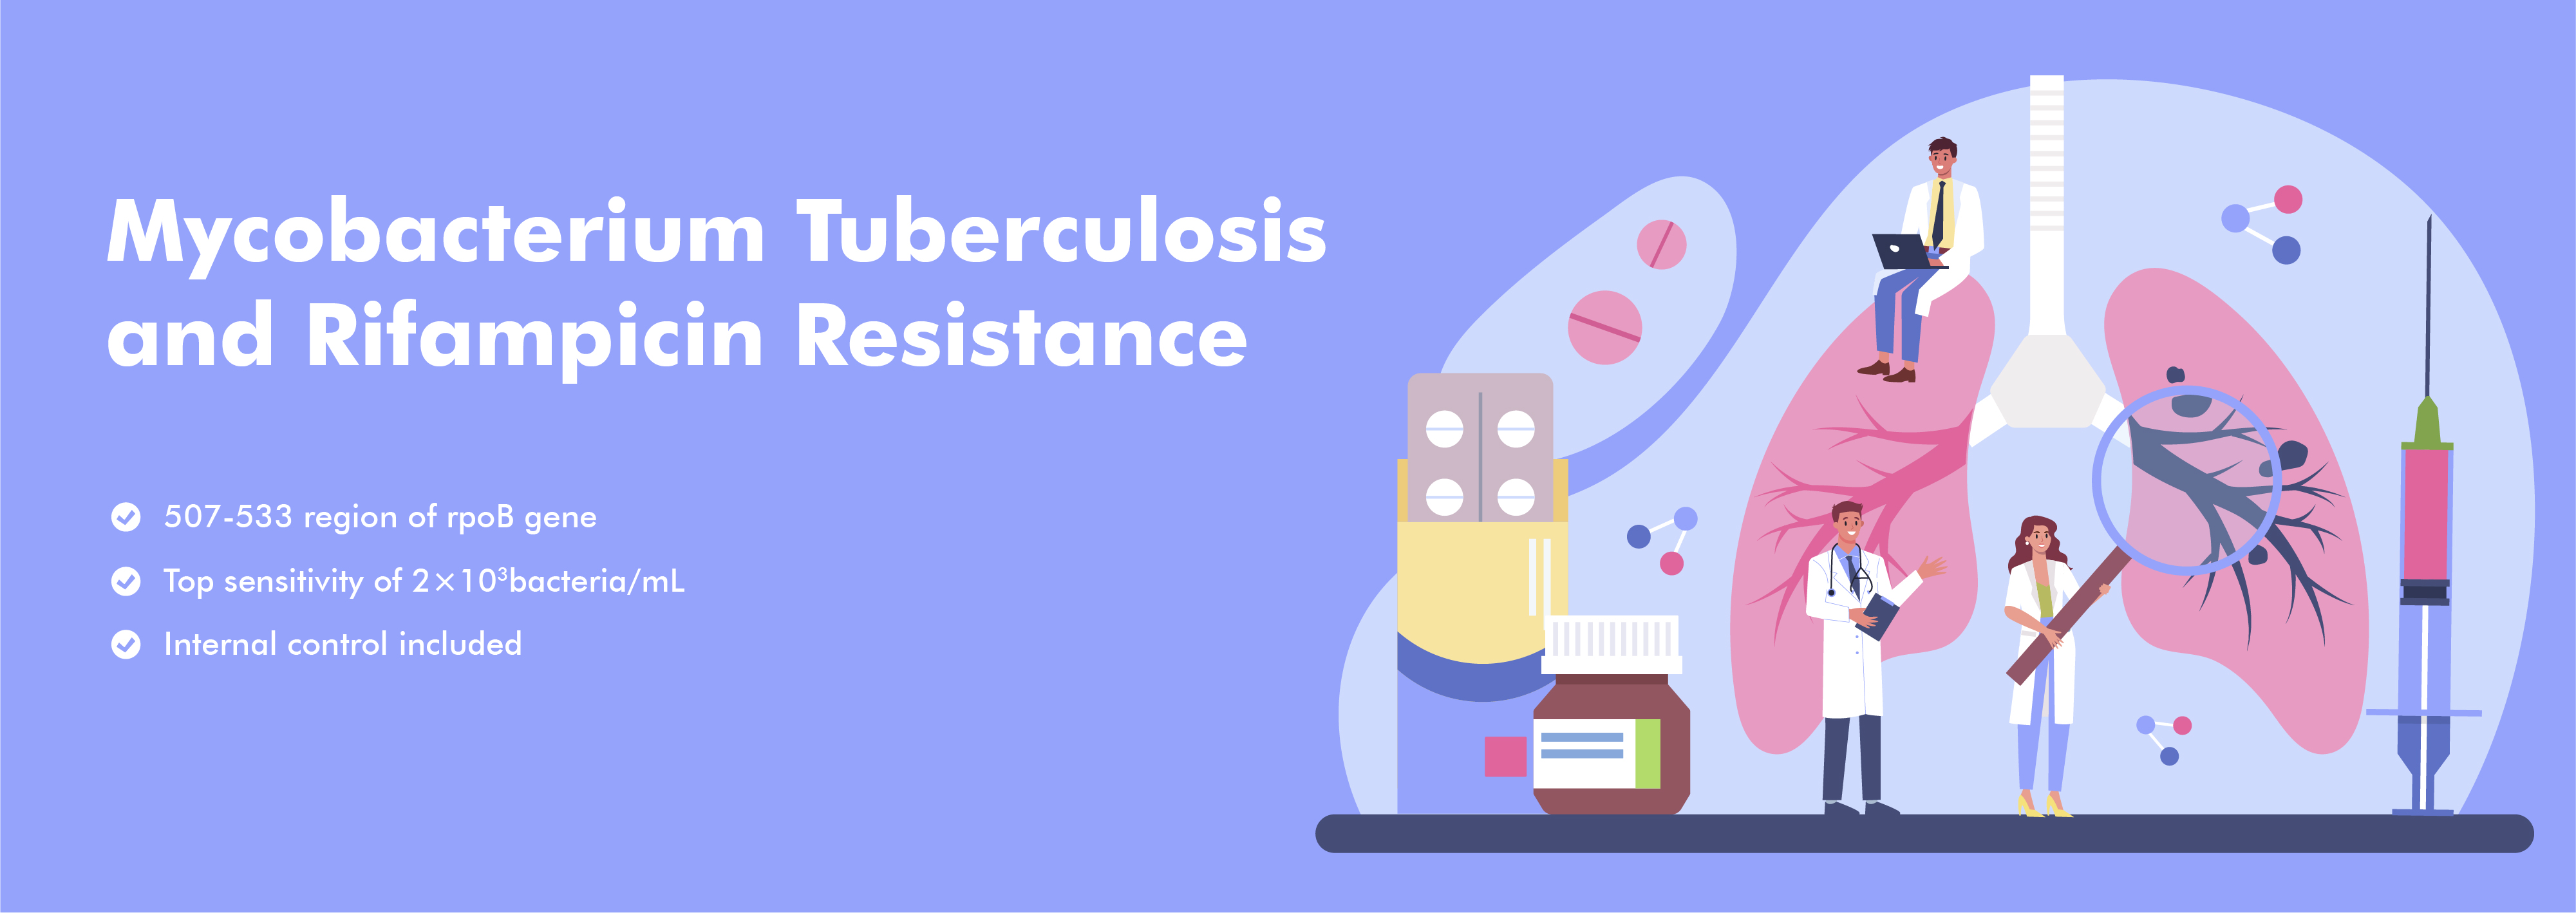 Mycobacterium Tuberculosis nukleinsyre- og rifampicinresistens